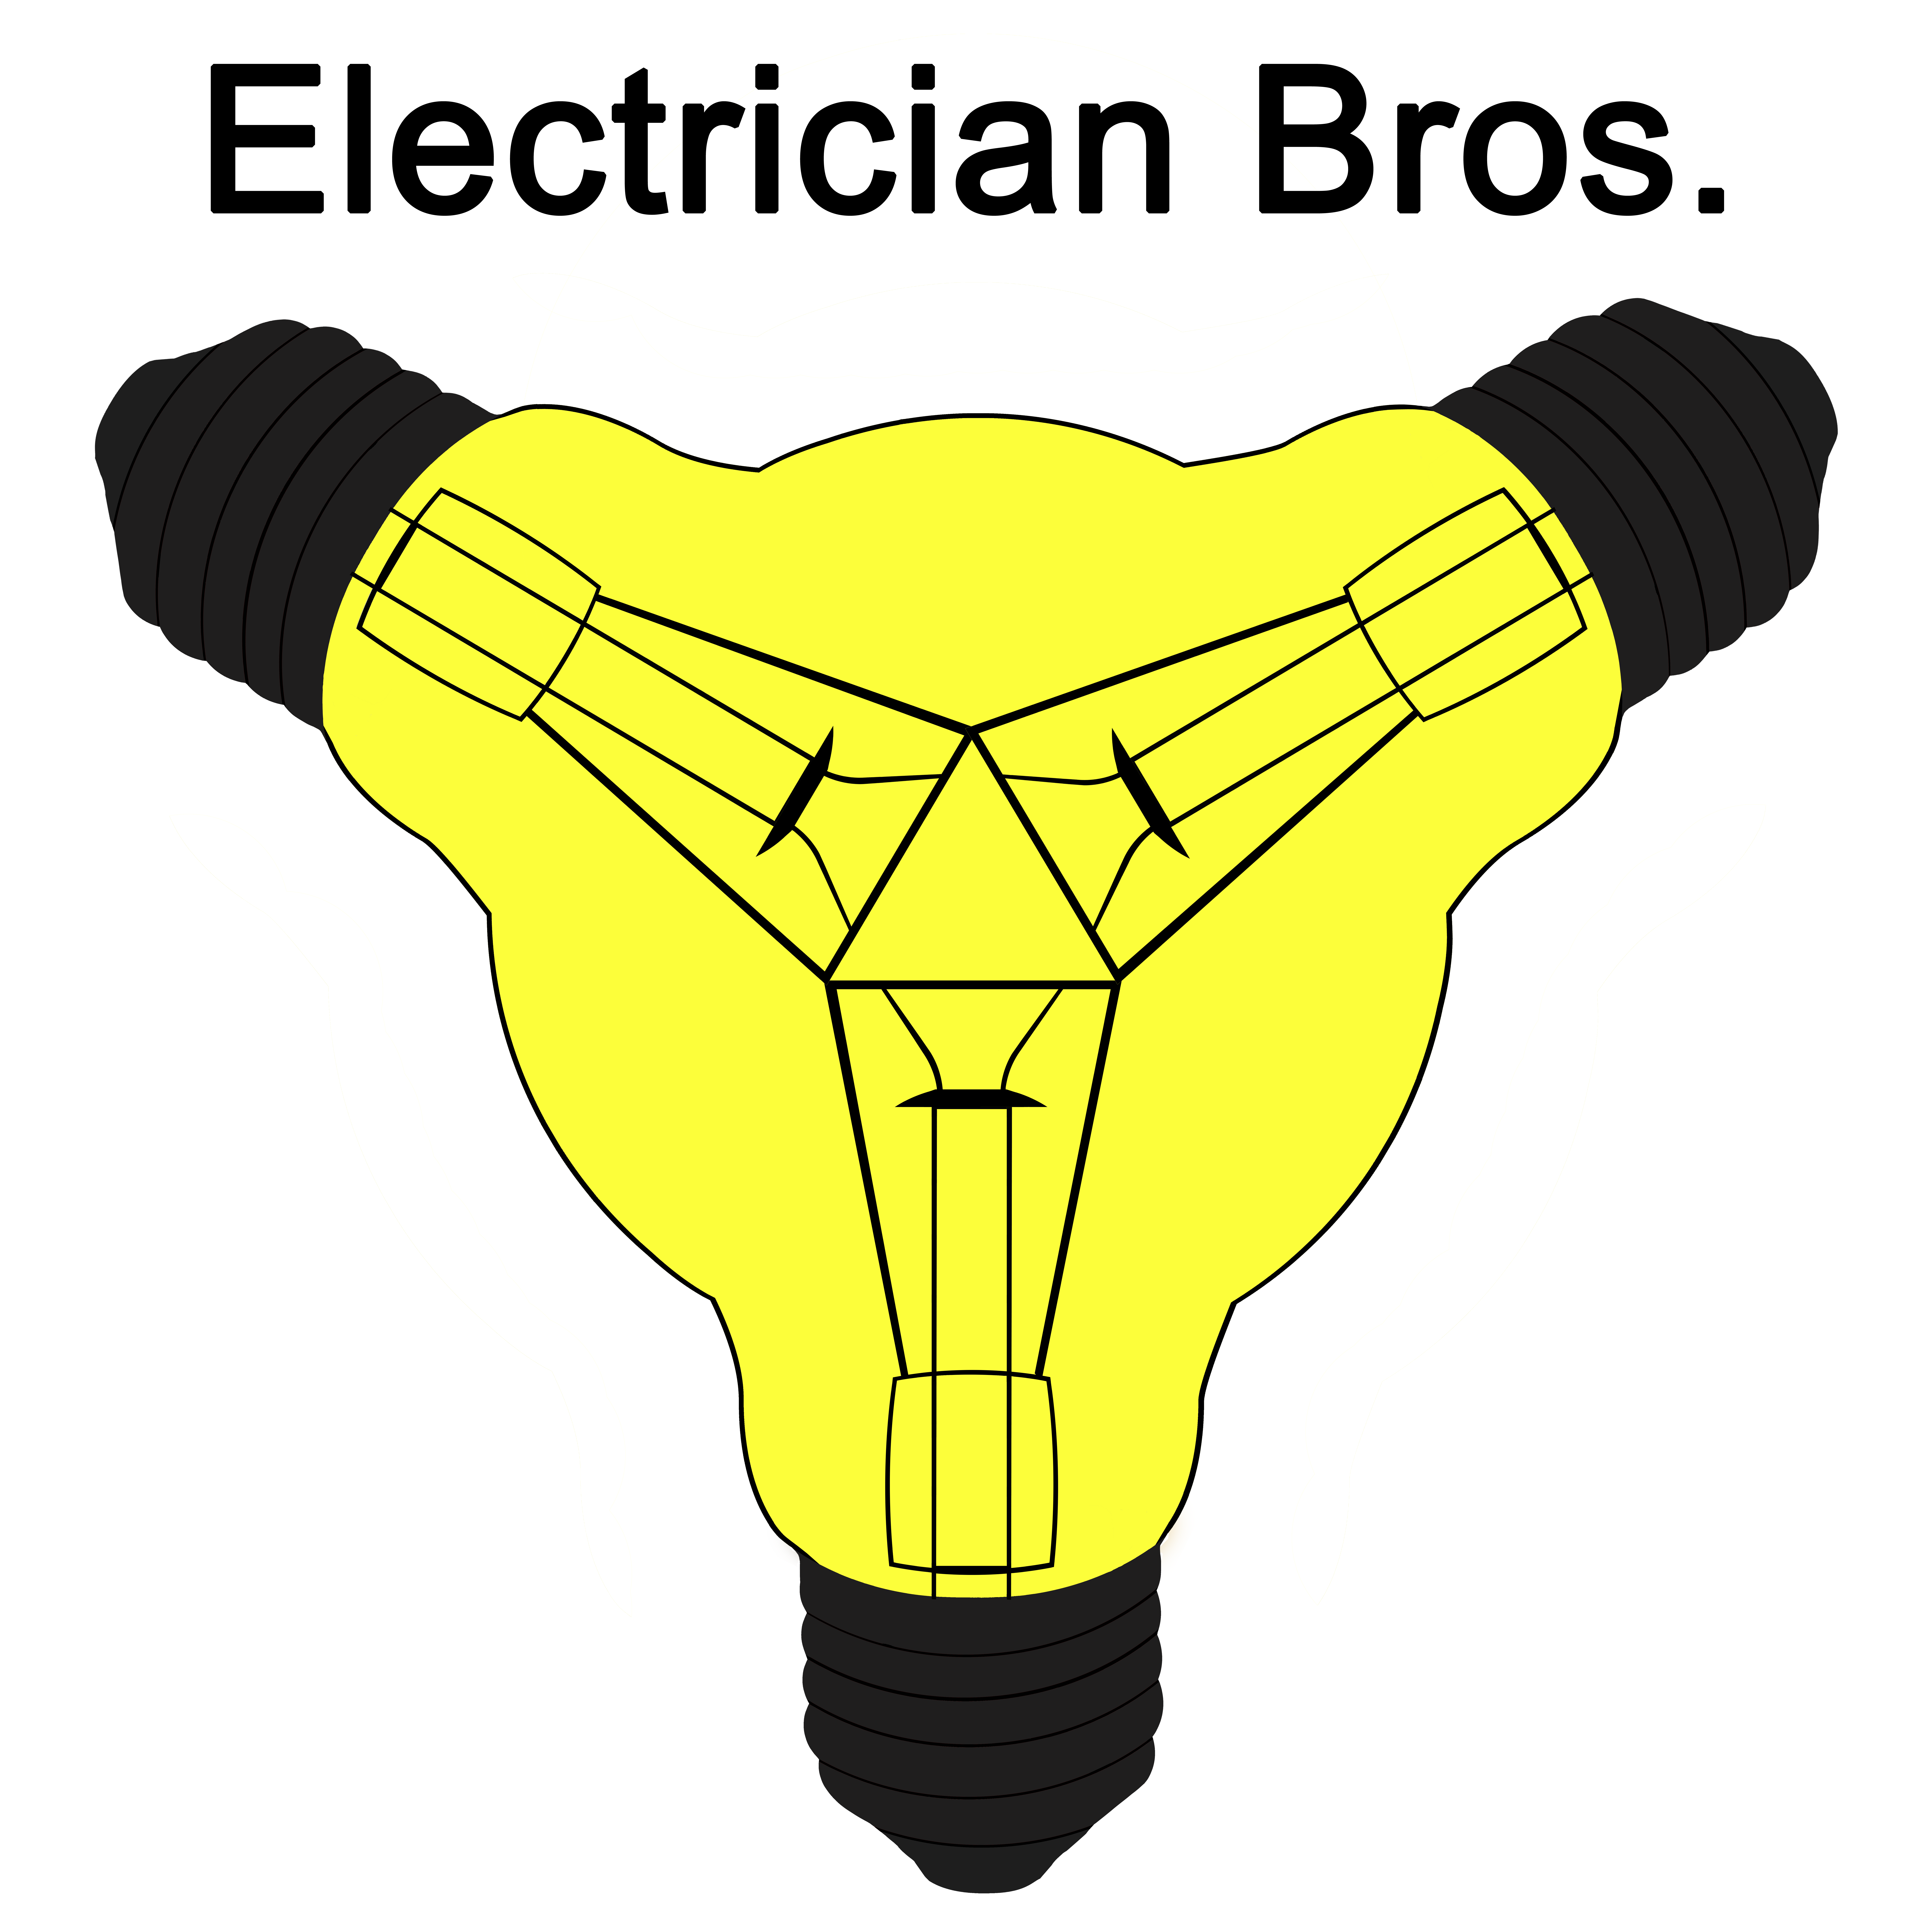 Electrician Bros